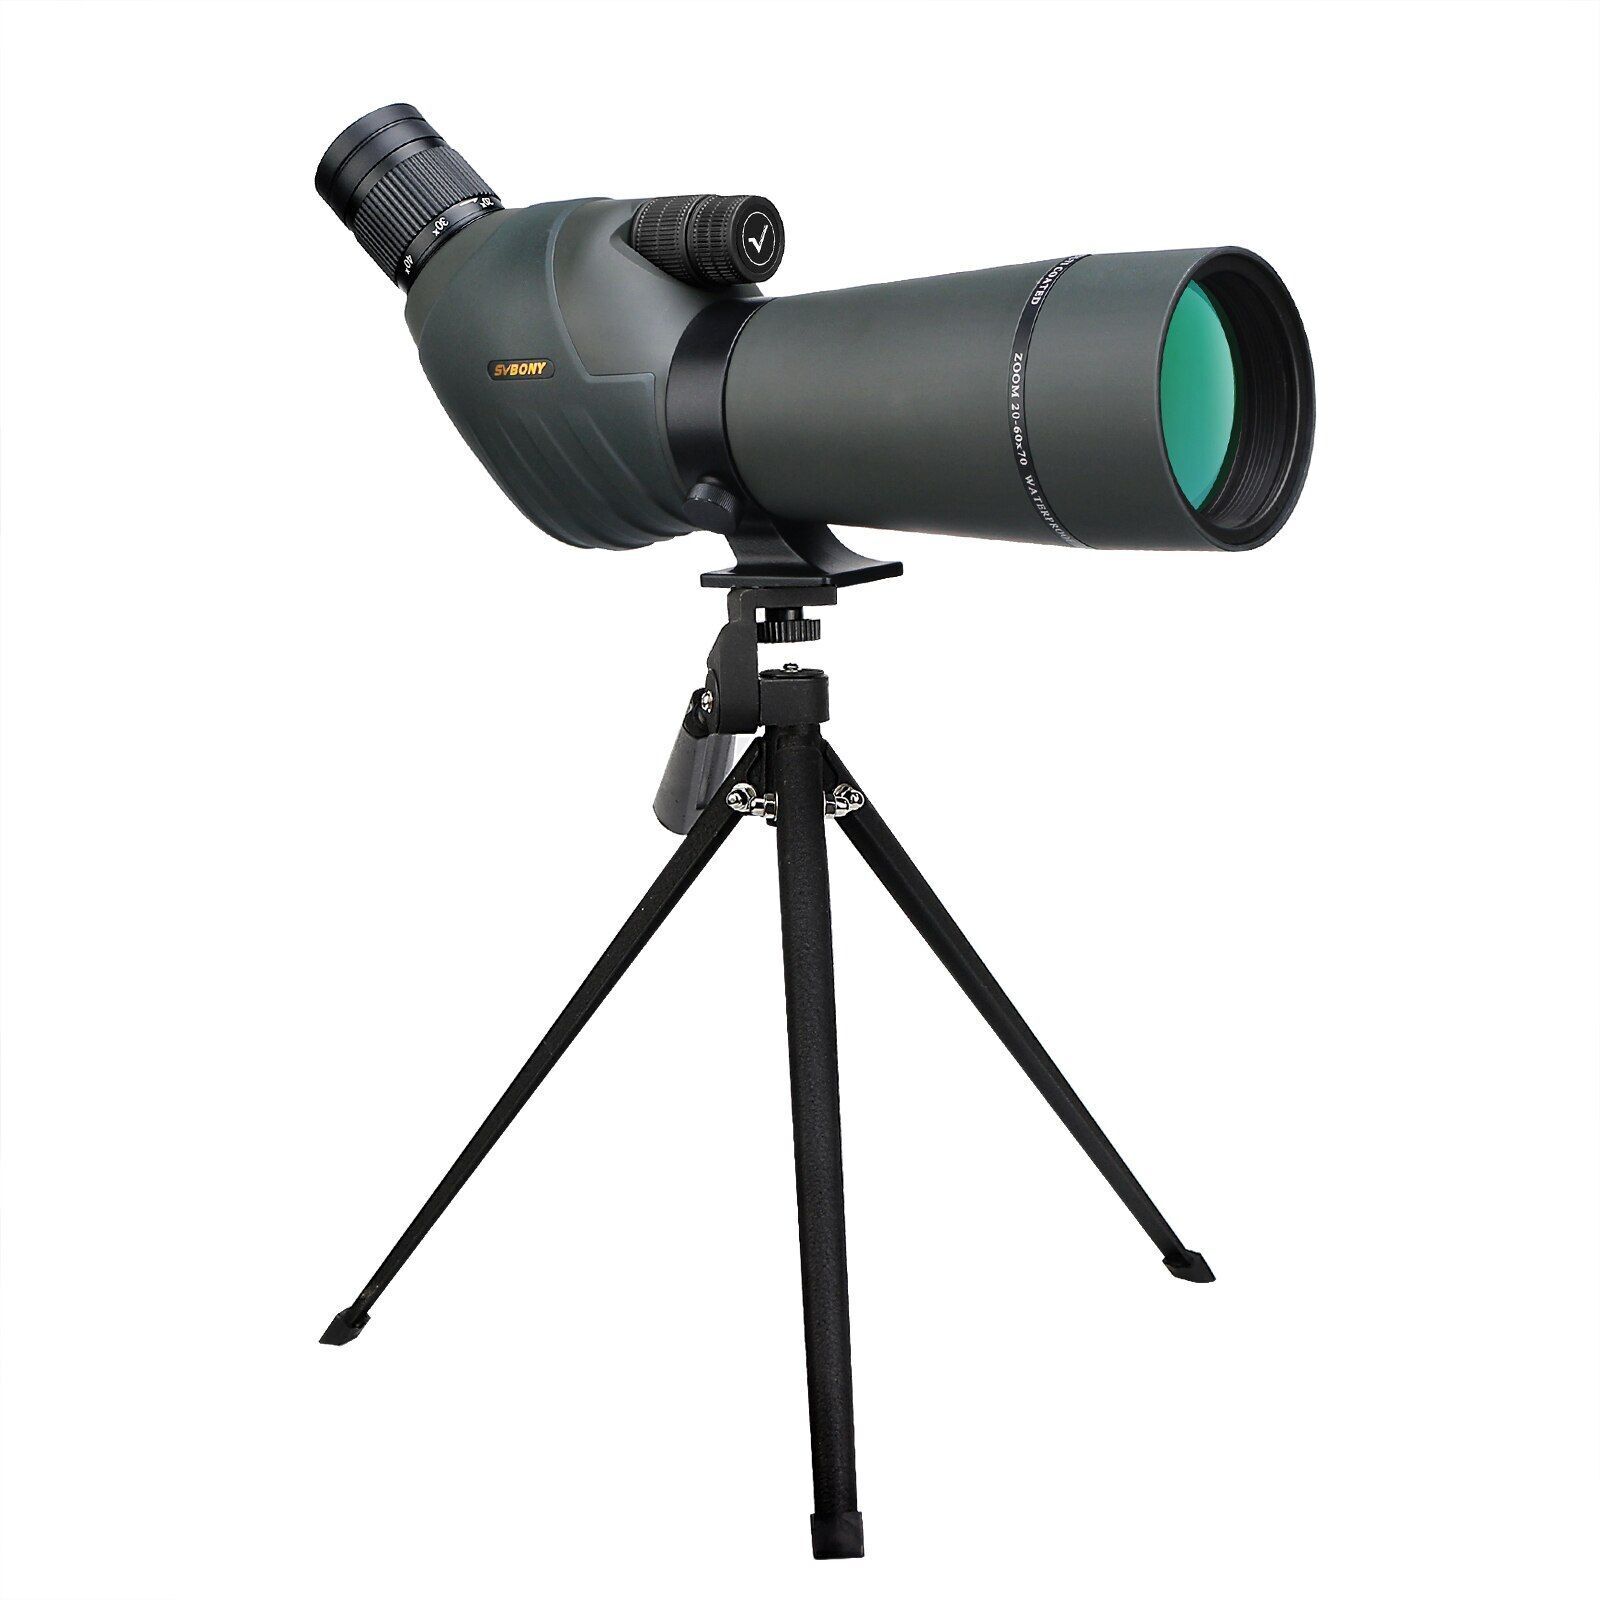 SVBONY-SV411 20-60X70/80 Dual Focus Spotting Scope Professional Telescope